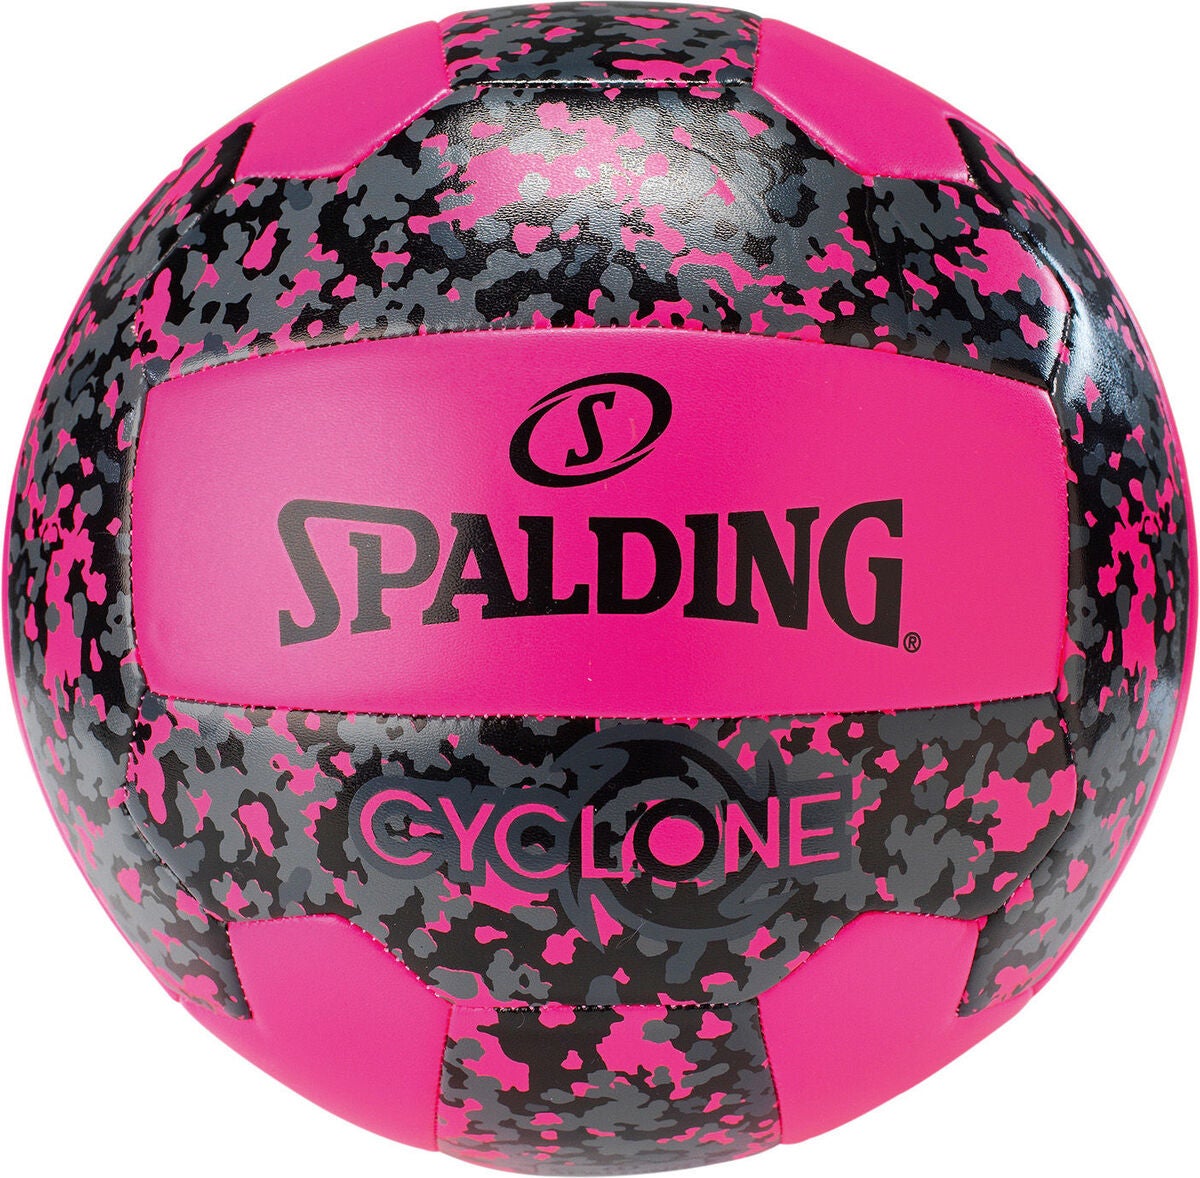 Spalding volleyball